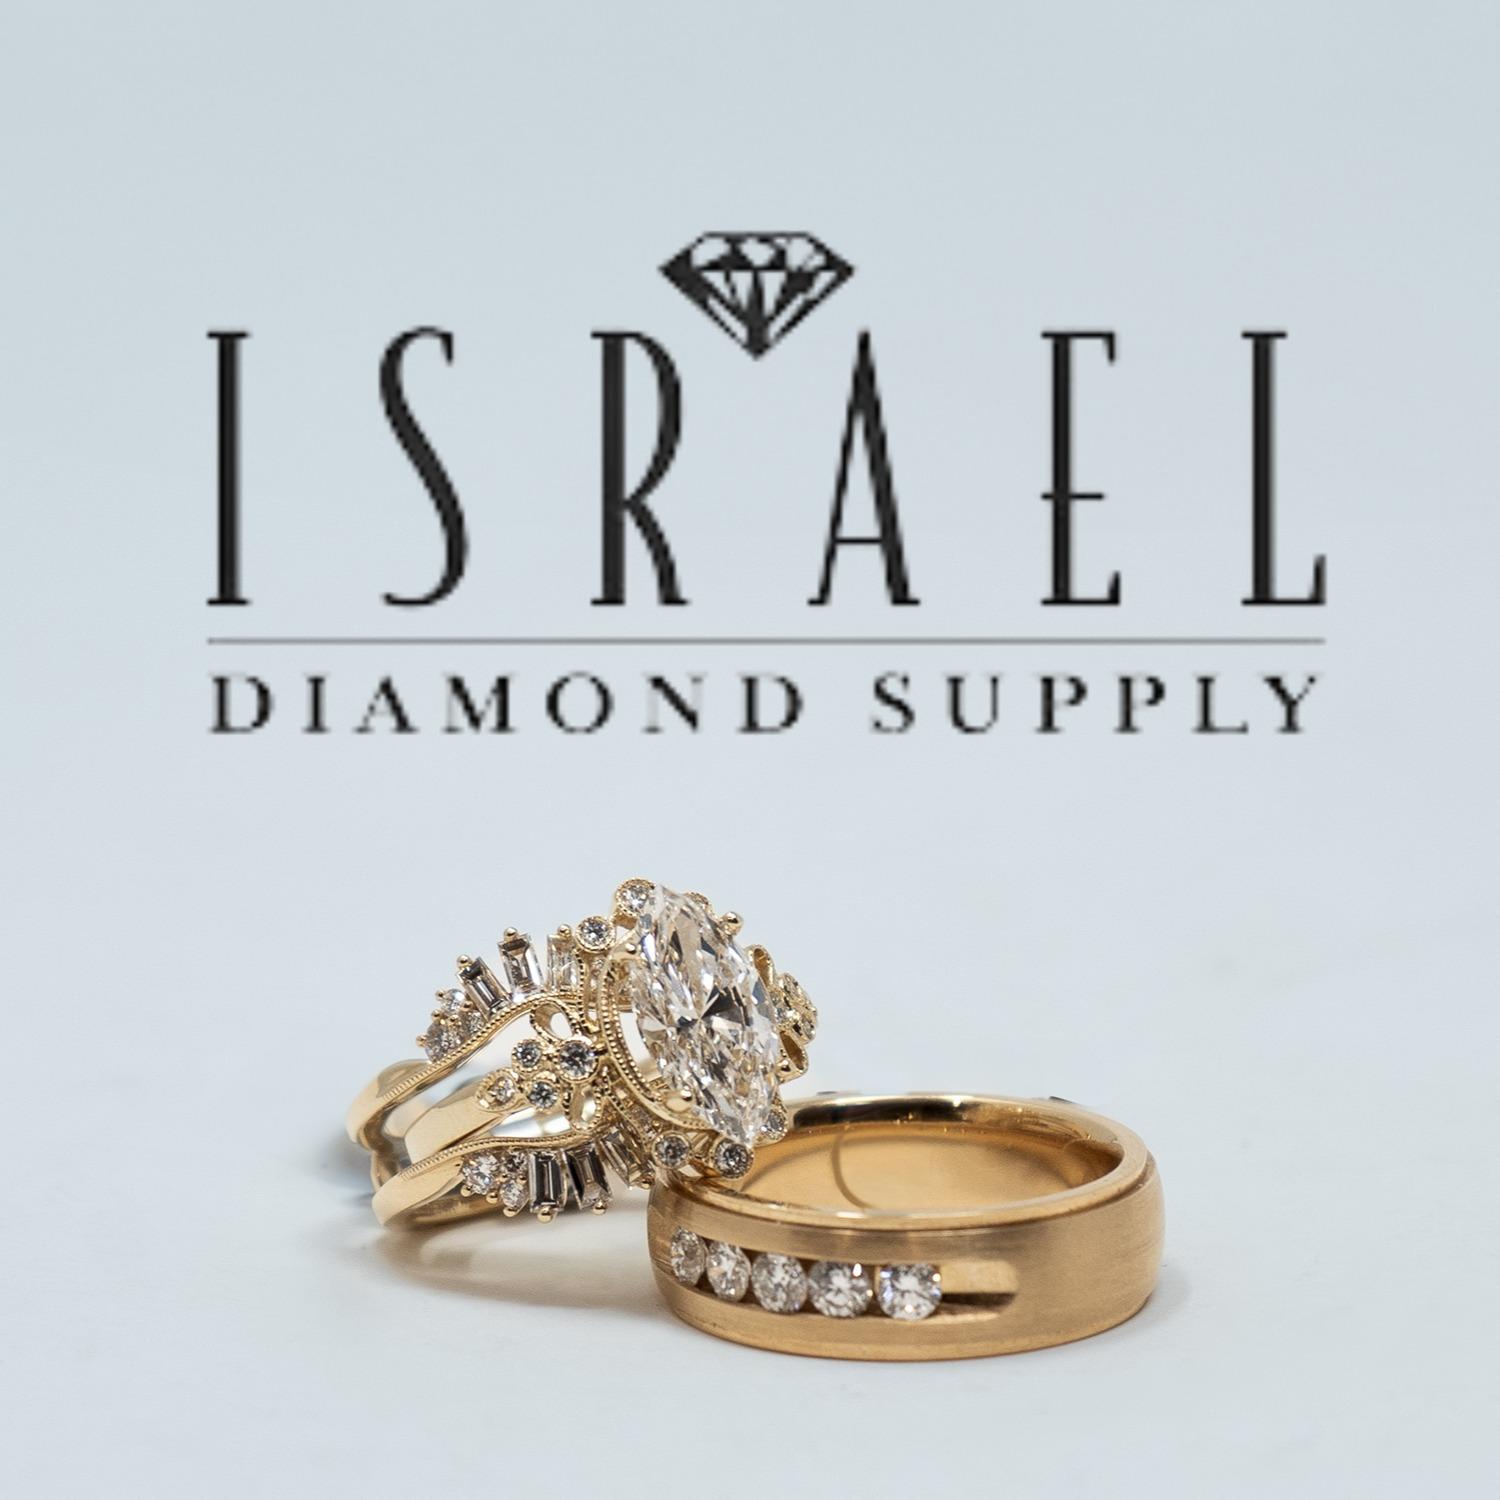 Israel Diamond Supply - Tulsa Jewelry Store